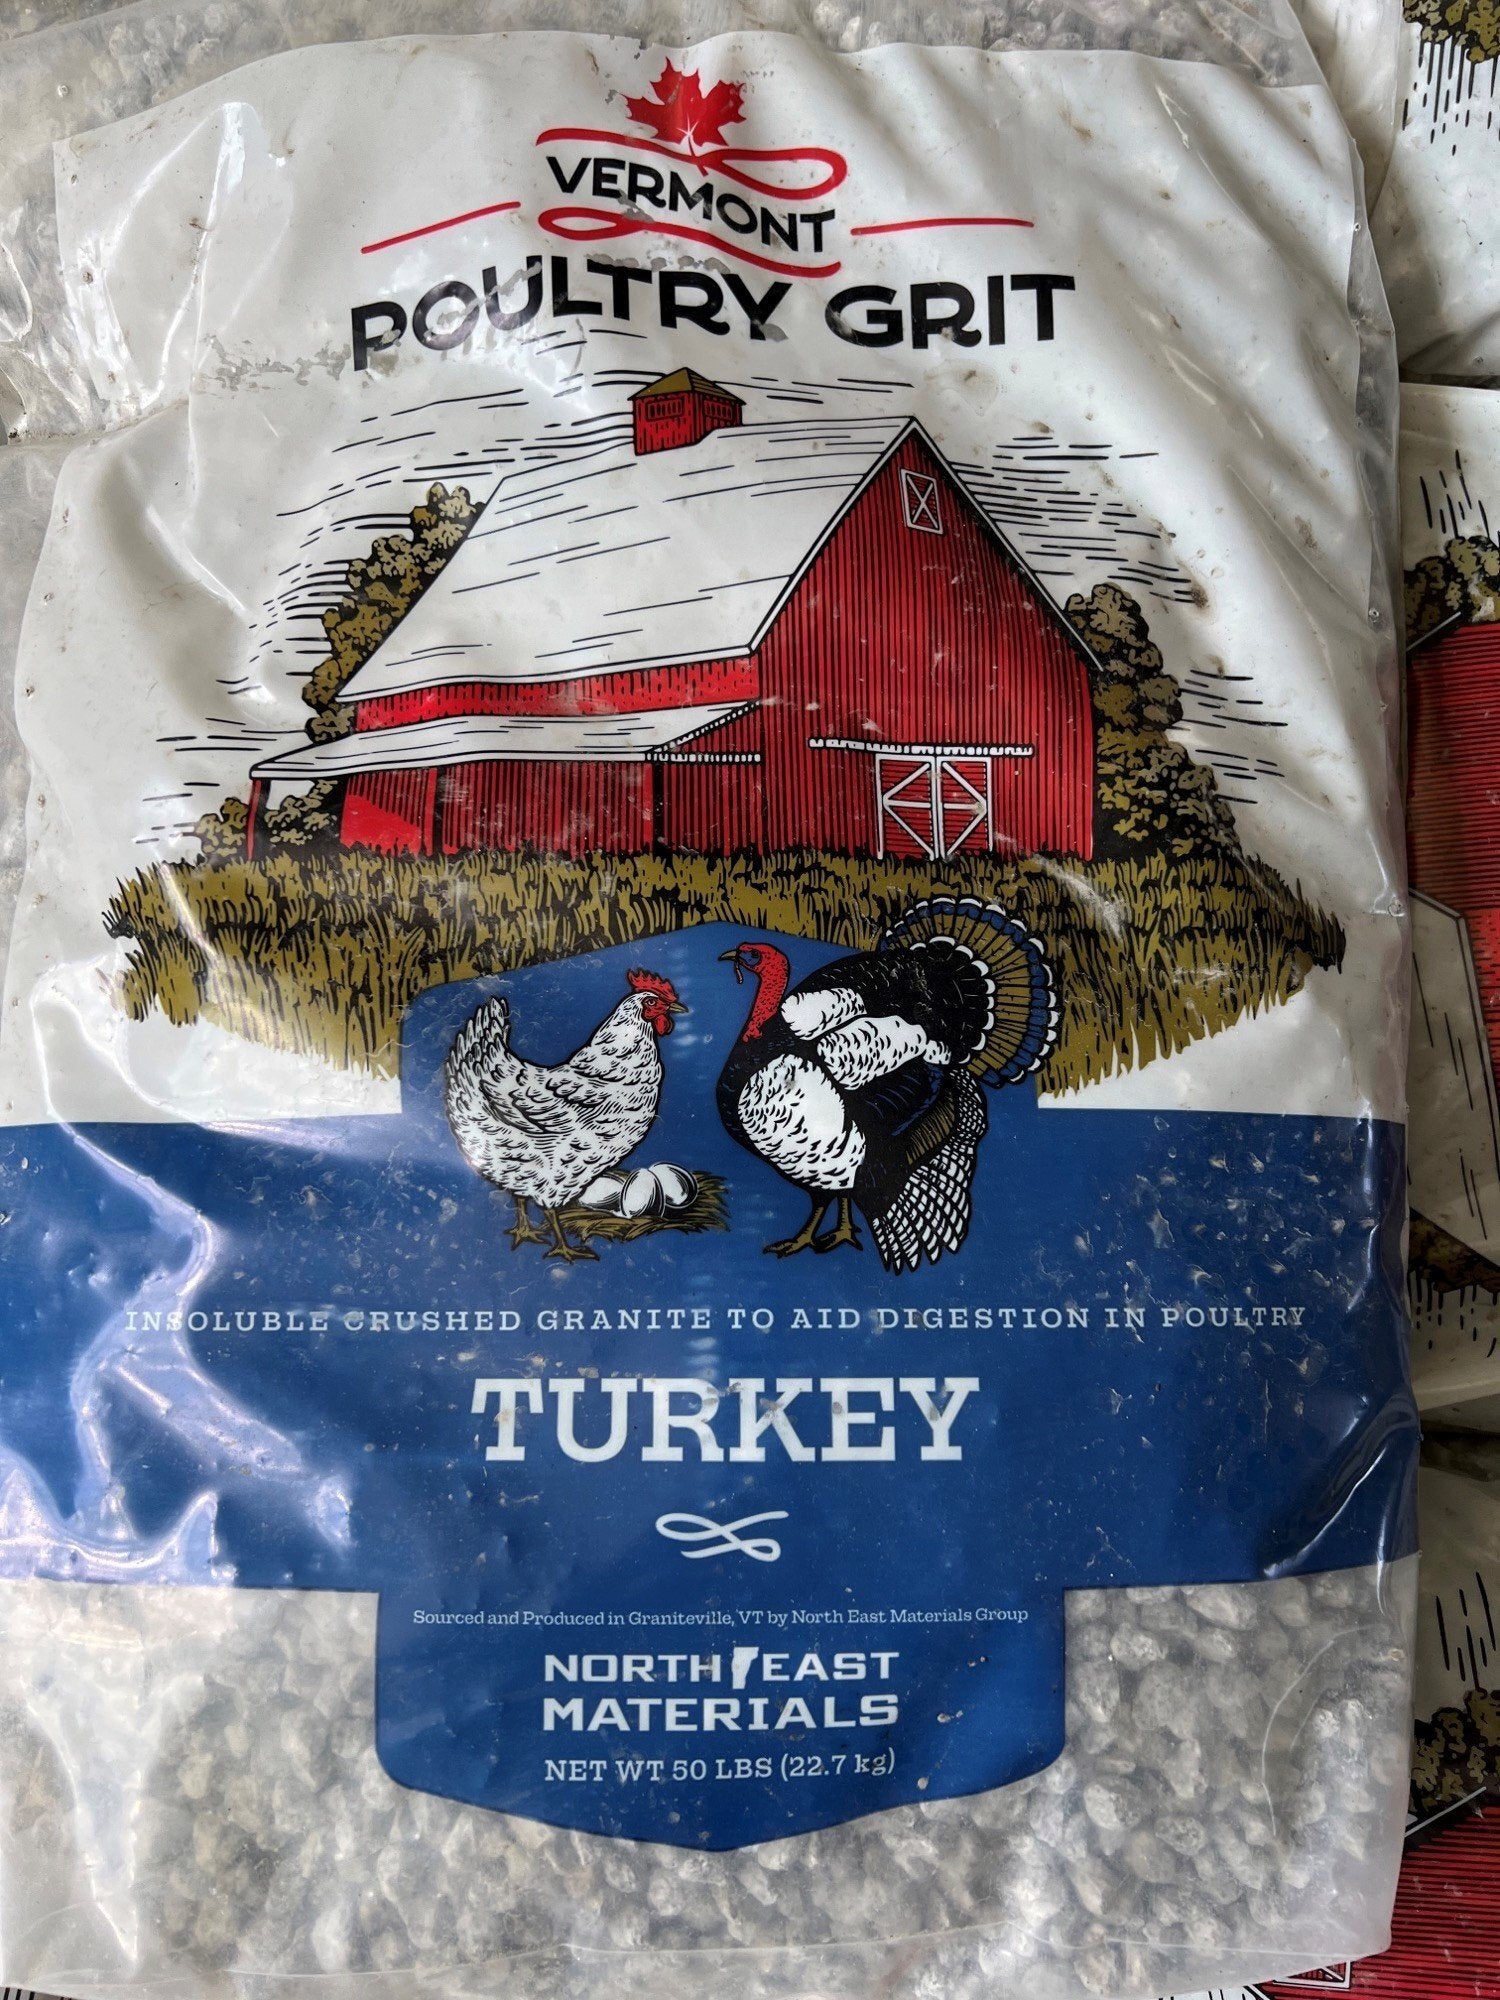 Vermont Poultry Grit - Turkey